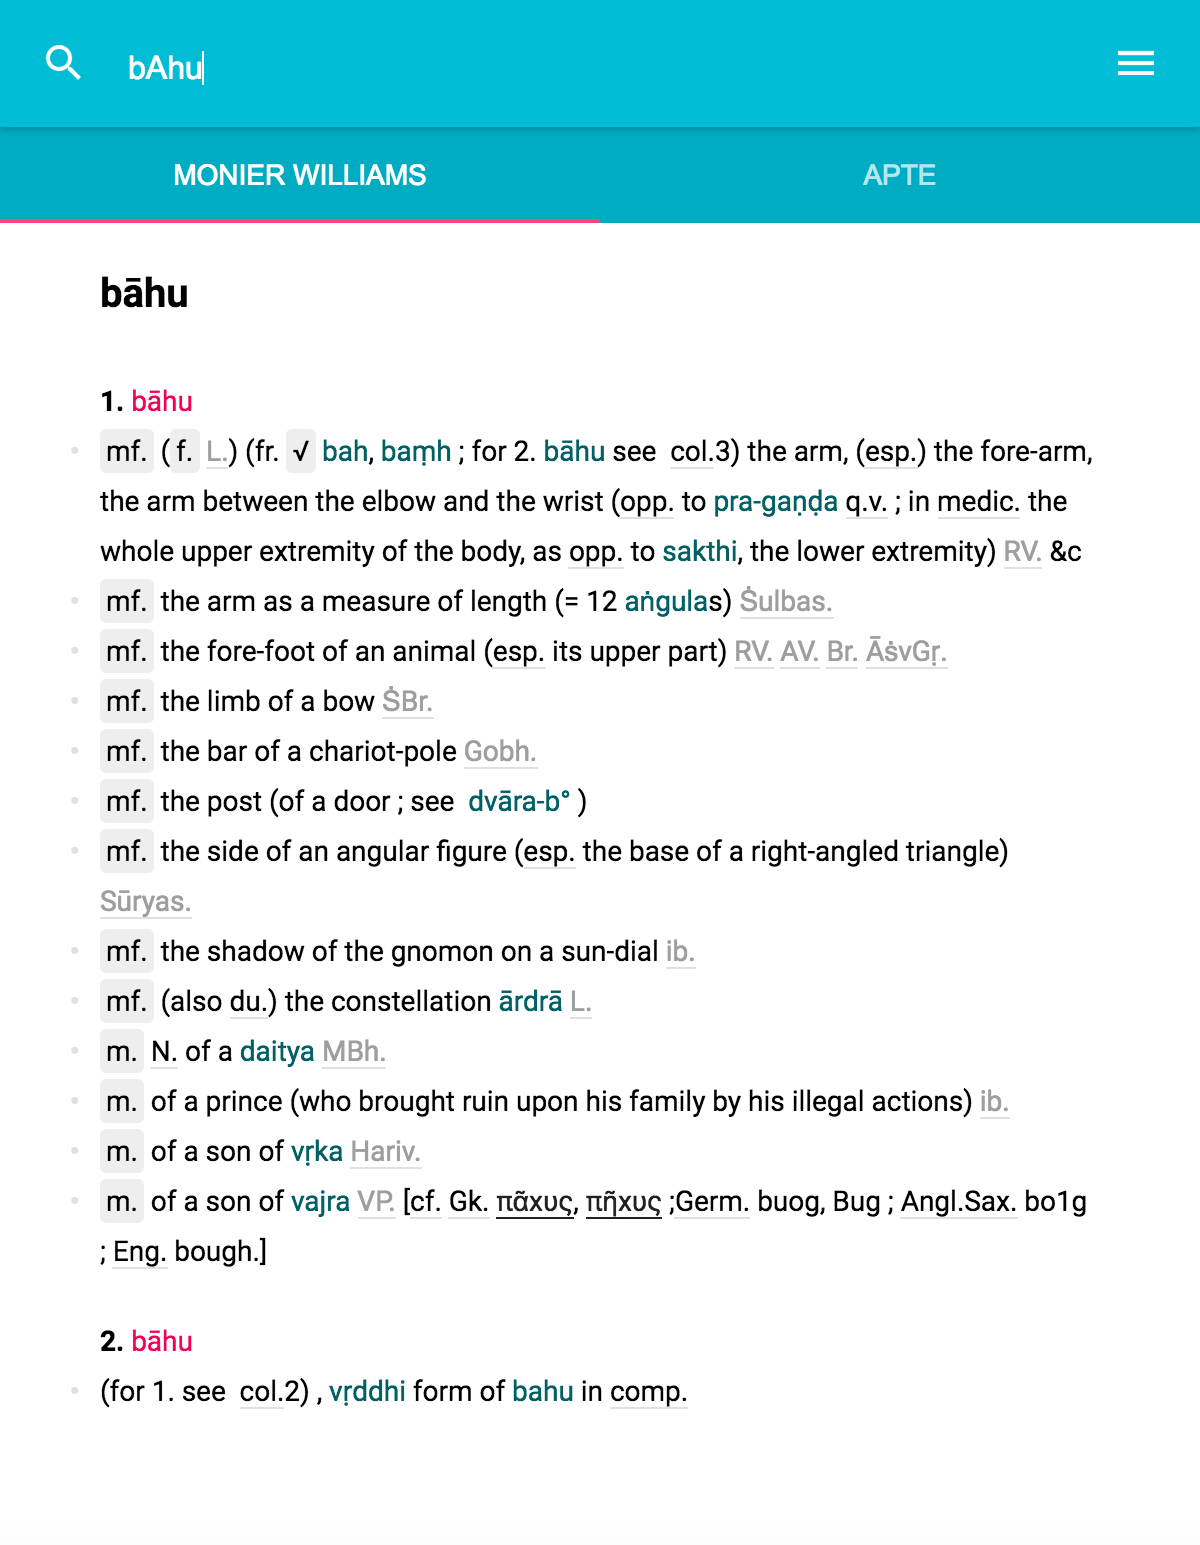 Moniew-Williams translation of "bāhu" word